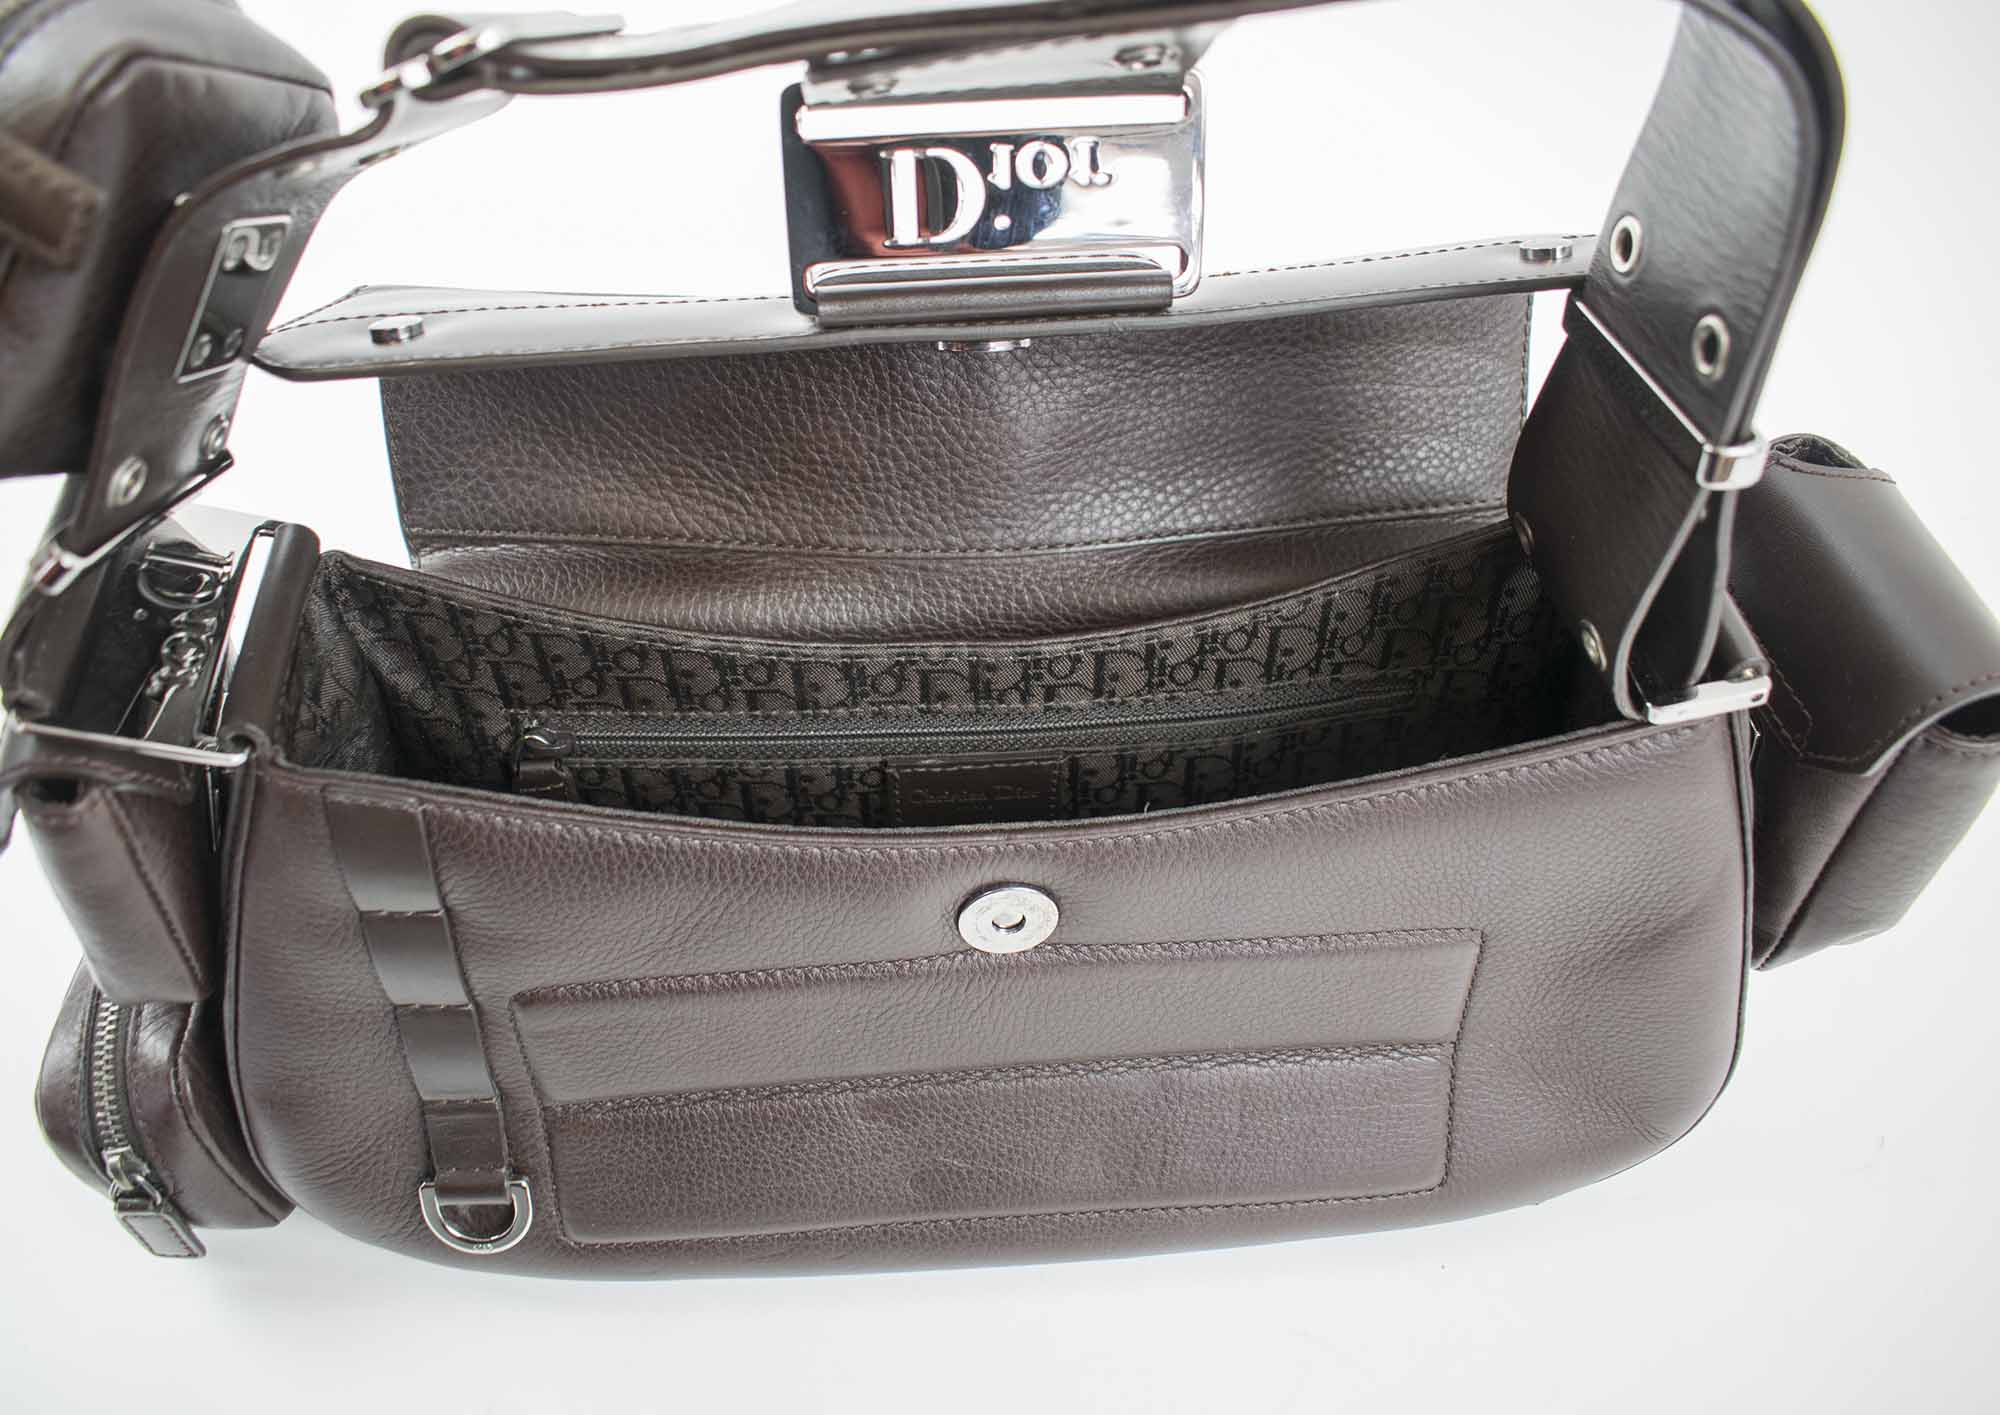 Christian Dior Street Chic Columbus Ave Bag  Neutrals Shoulder Bags  Handbags  CHR322877  The RealReal